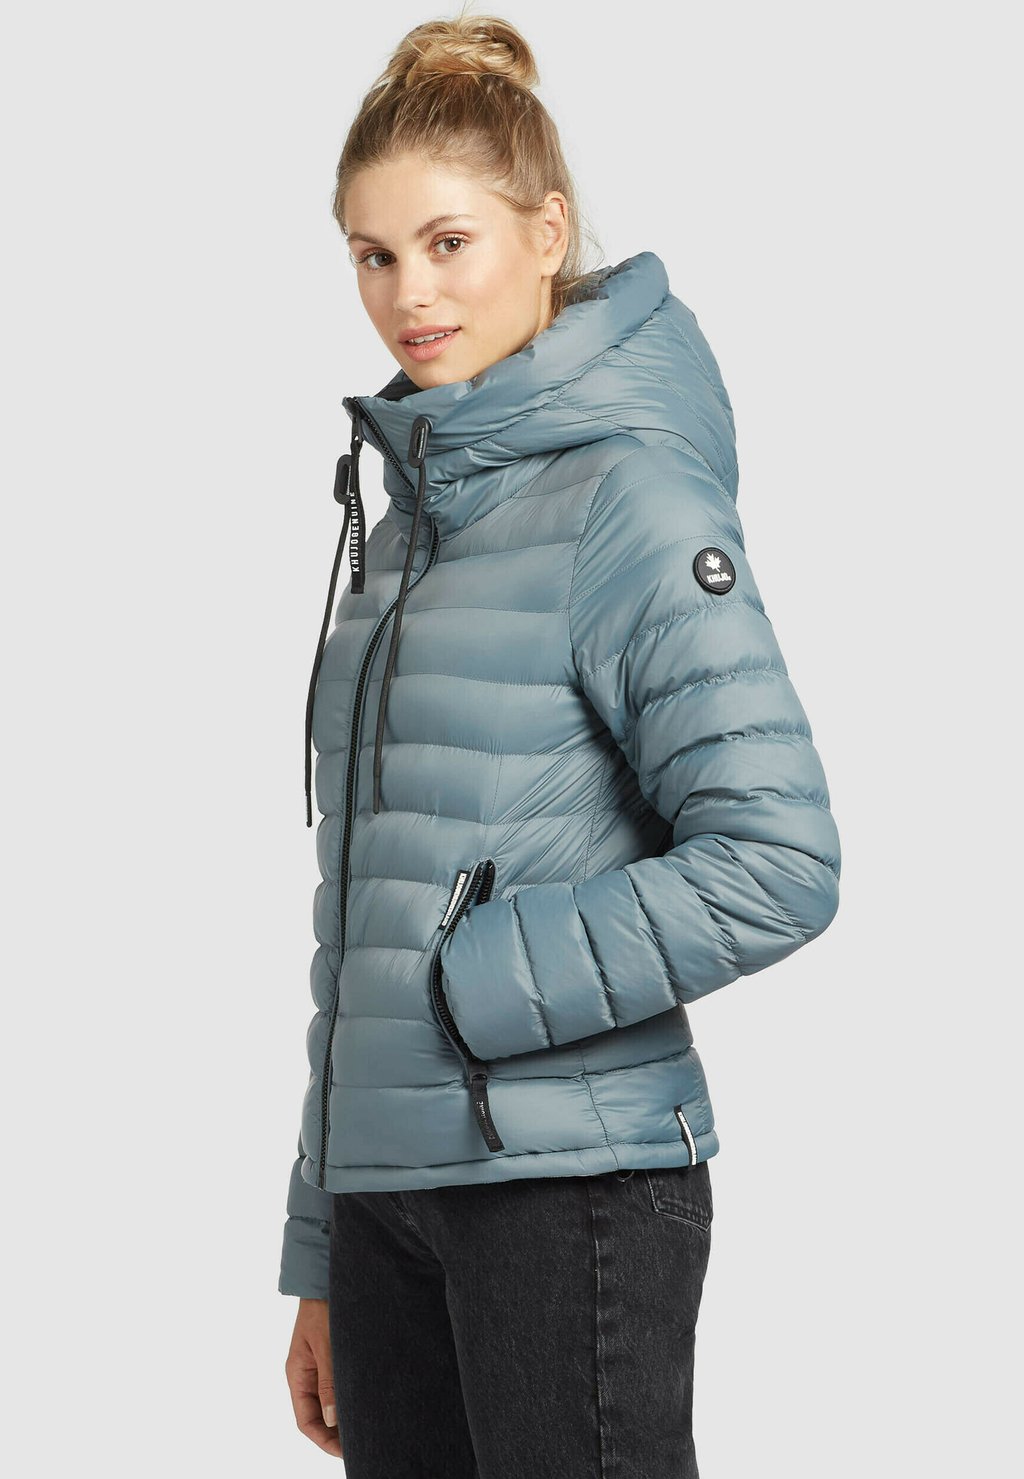 Зимняя куртка Lovina2 Shine khujo, цвет blaugrau зимняя куртка collin khujo цвет grau